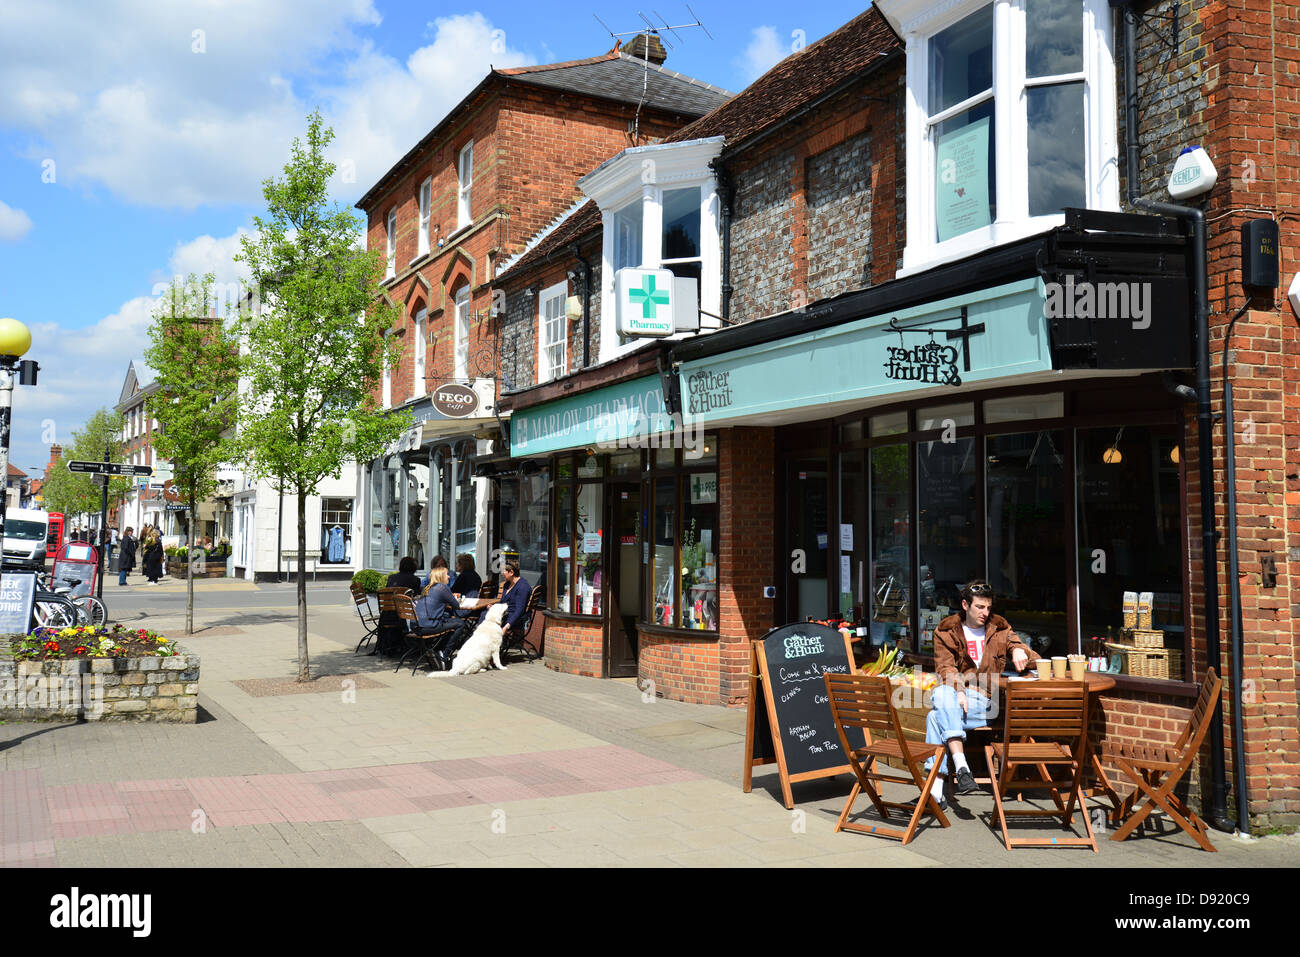 Pavement cafes on High Street, Marlow, Buckinghamshire, England, United Kingdom Stock Photo